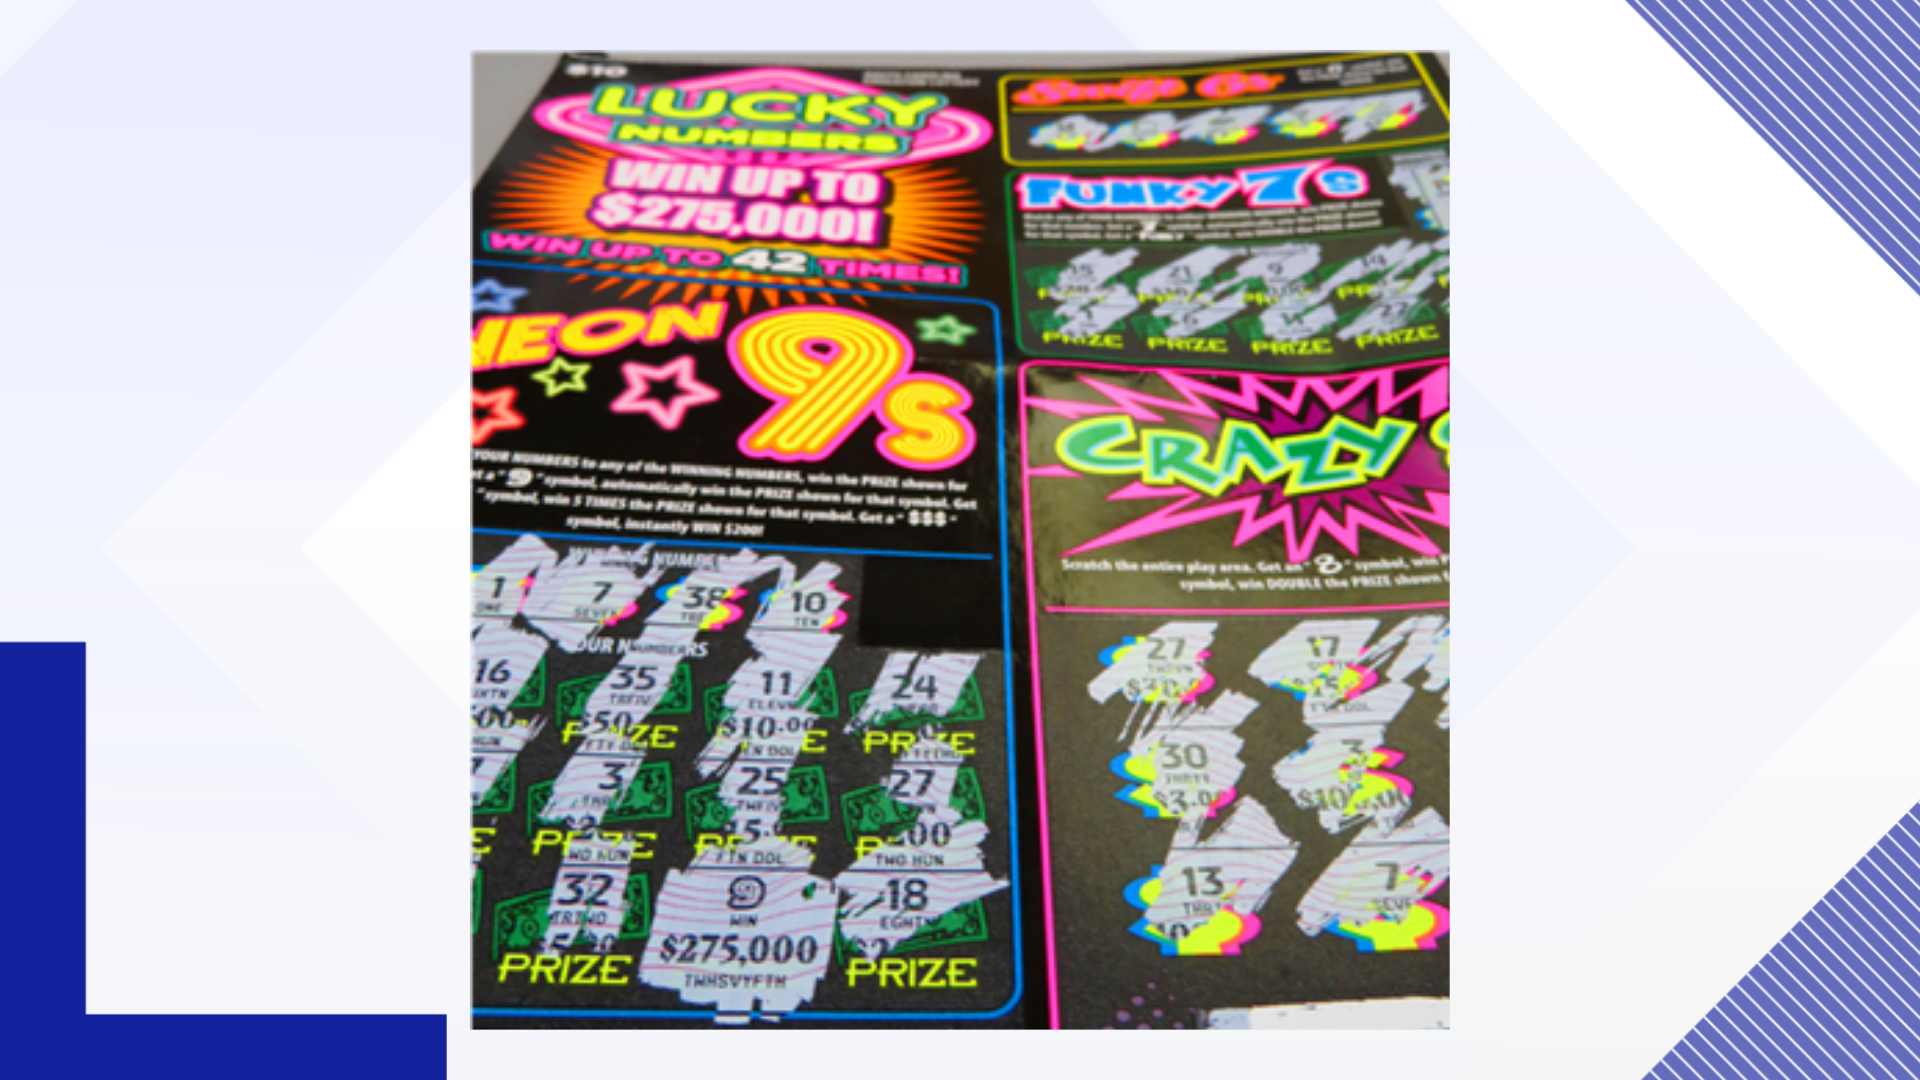 South Carolina lottery winner letting kids reap benefits of $275,000 win